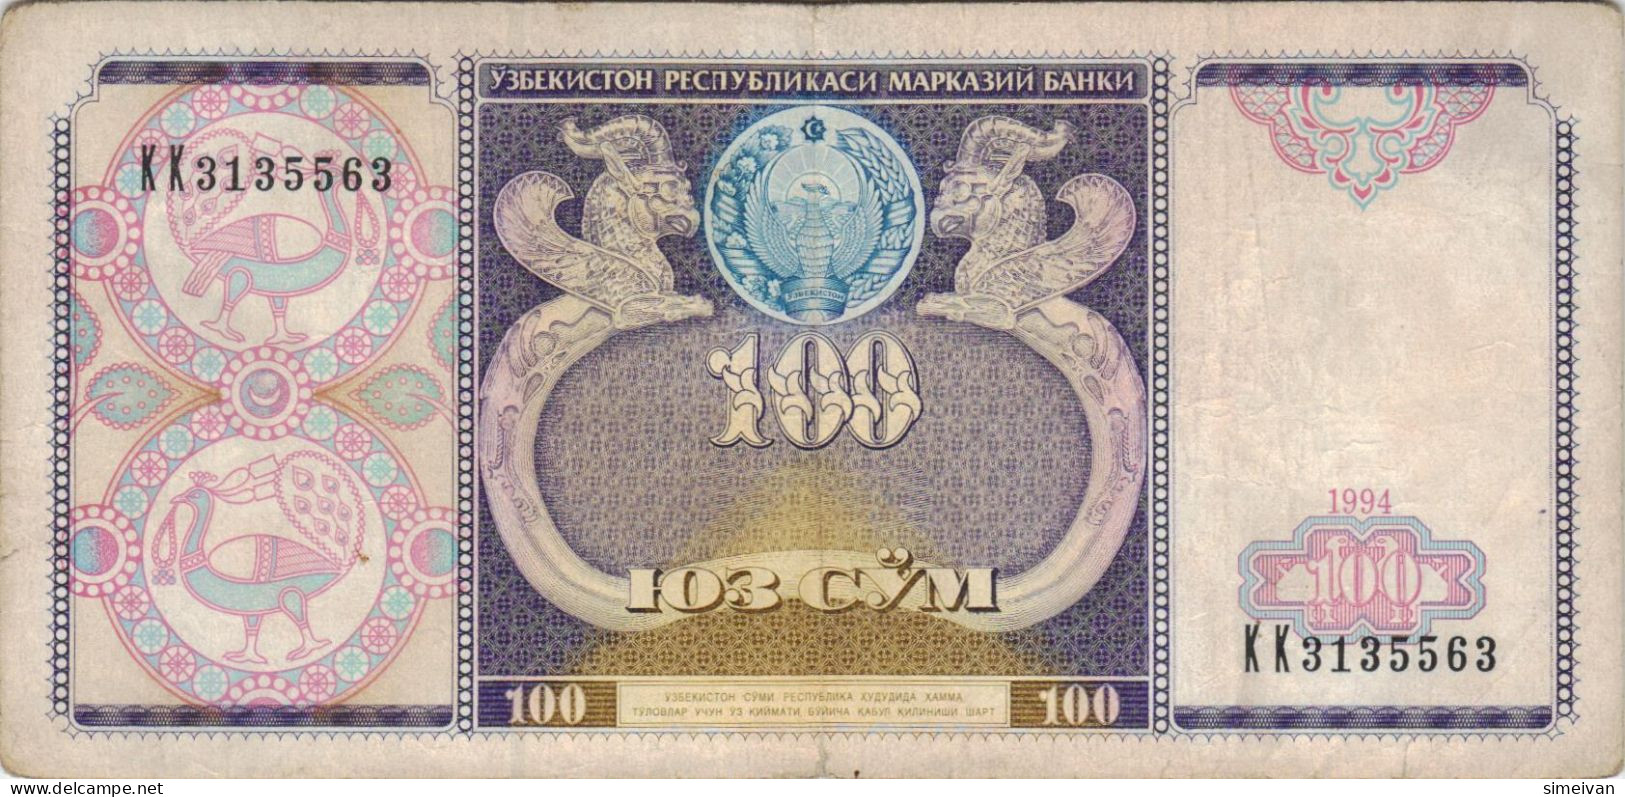 Uzbekistan 100 Sum 1994 P-79a Banknote Asia Currency Ouzbékistan Usbekistan #5336 - Uzbekistan